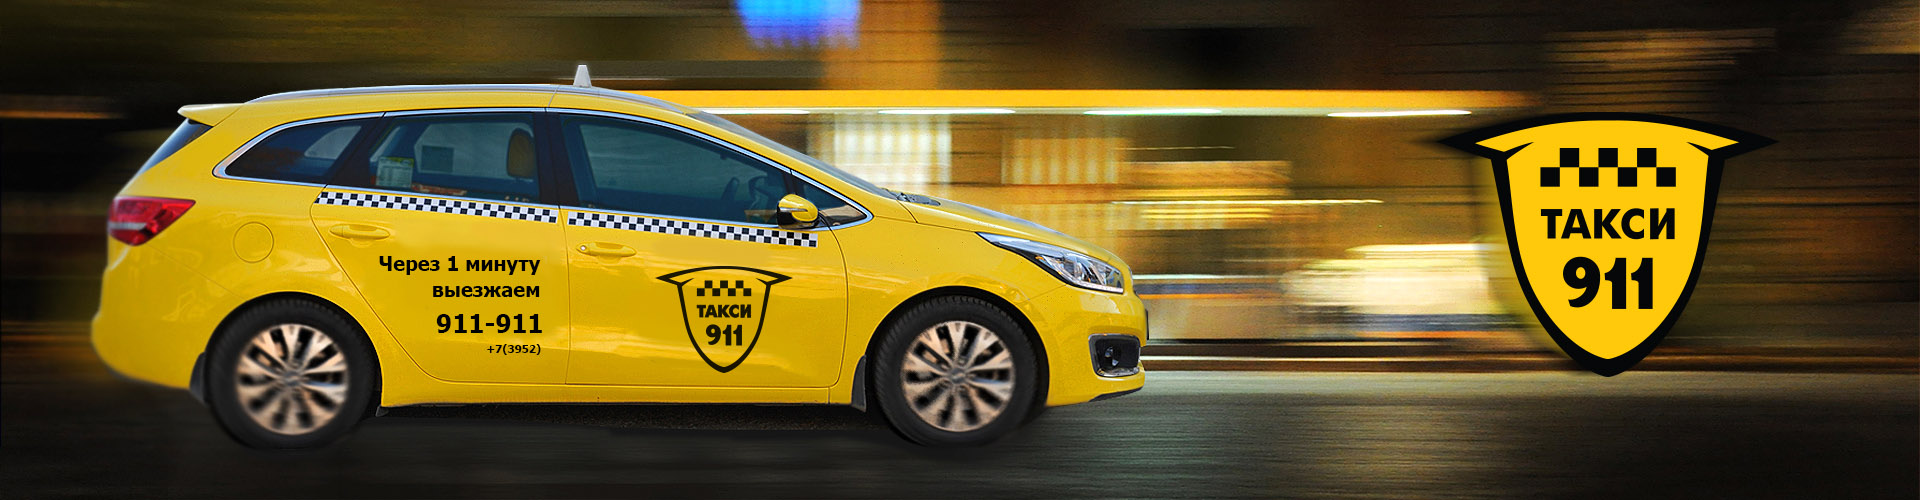 Logo службы такси